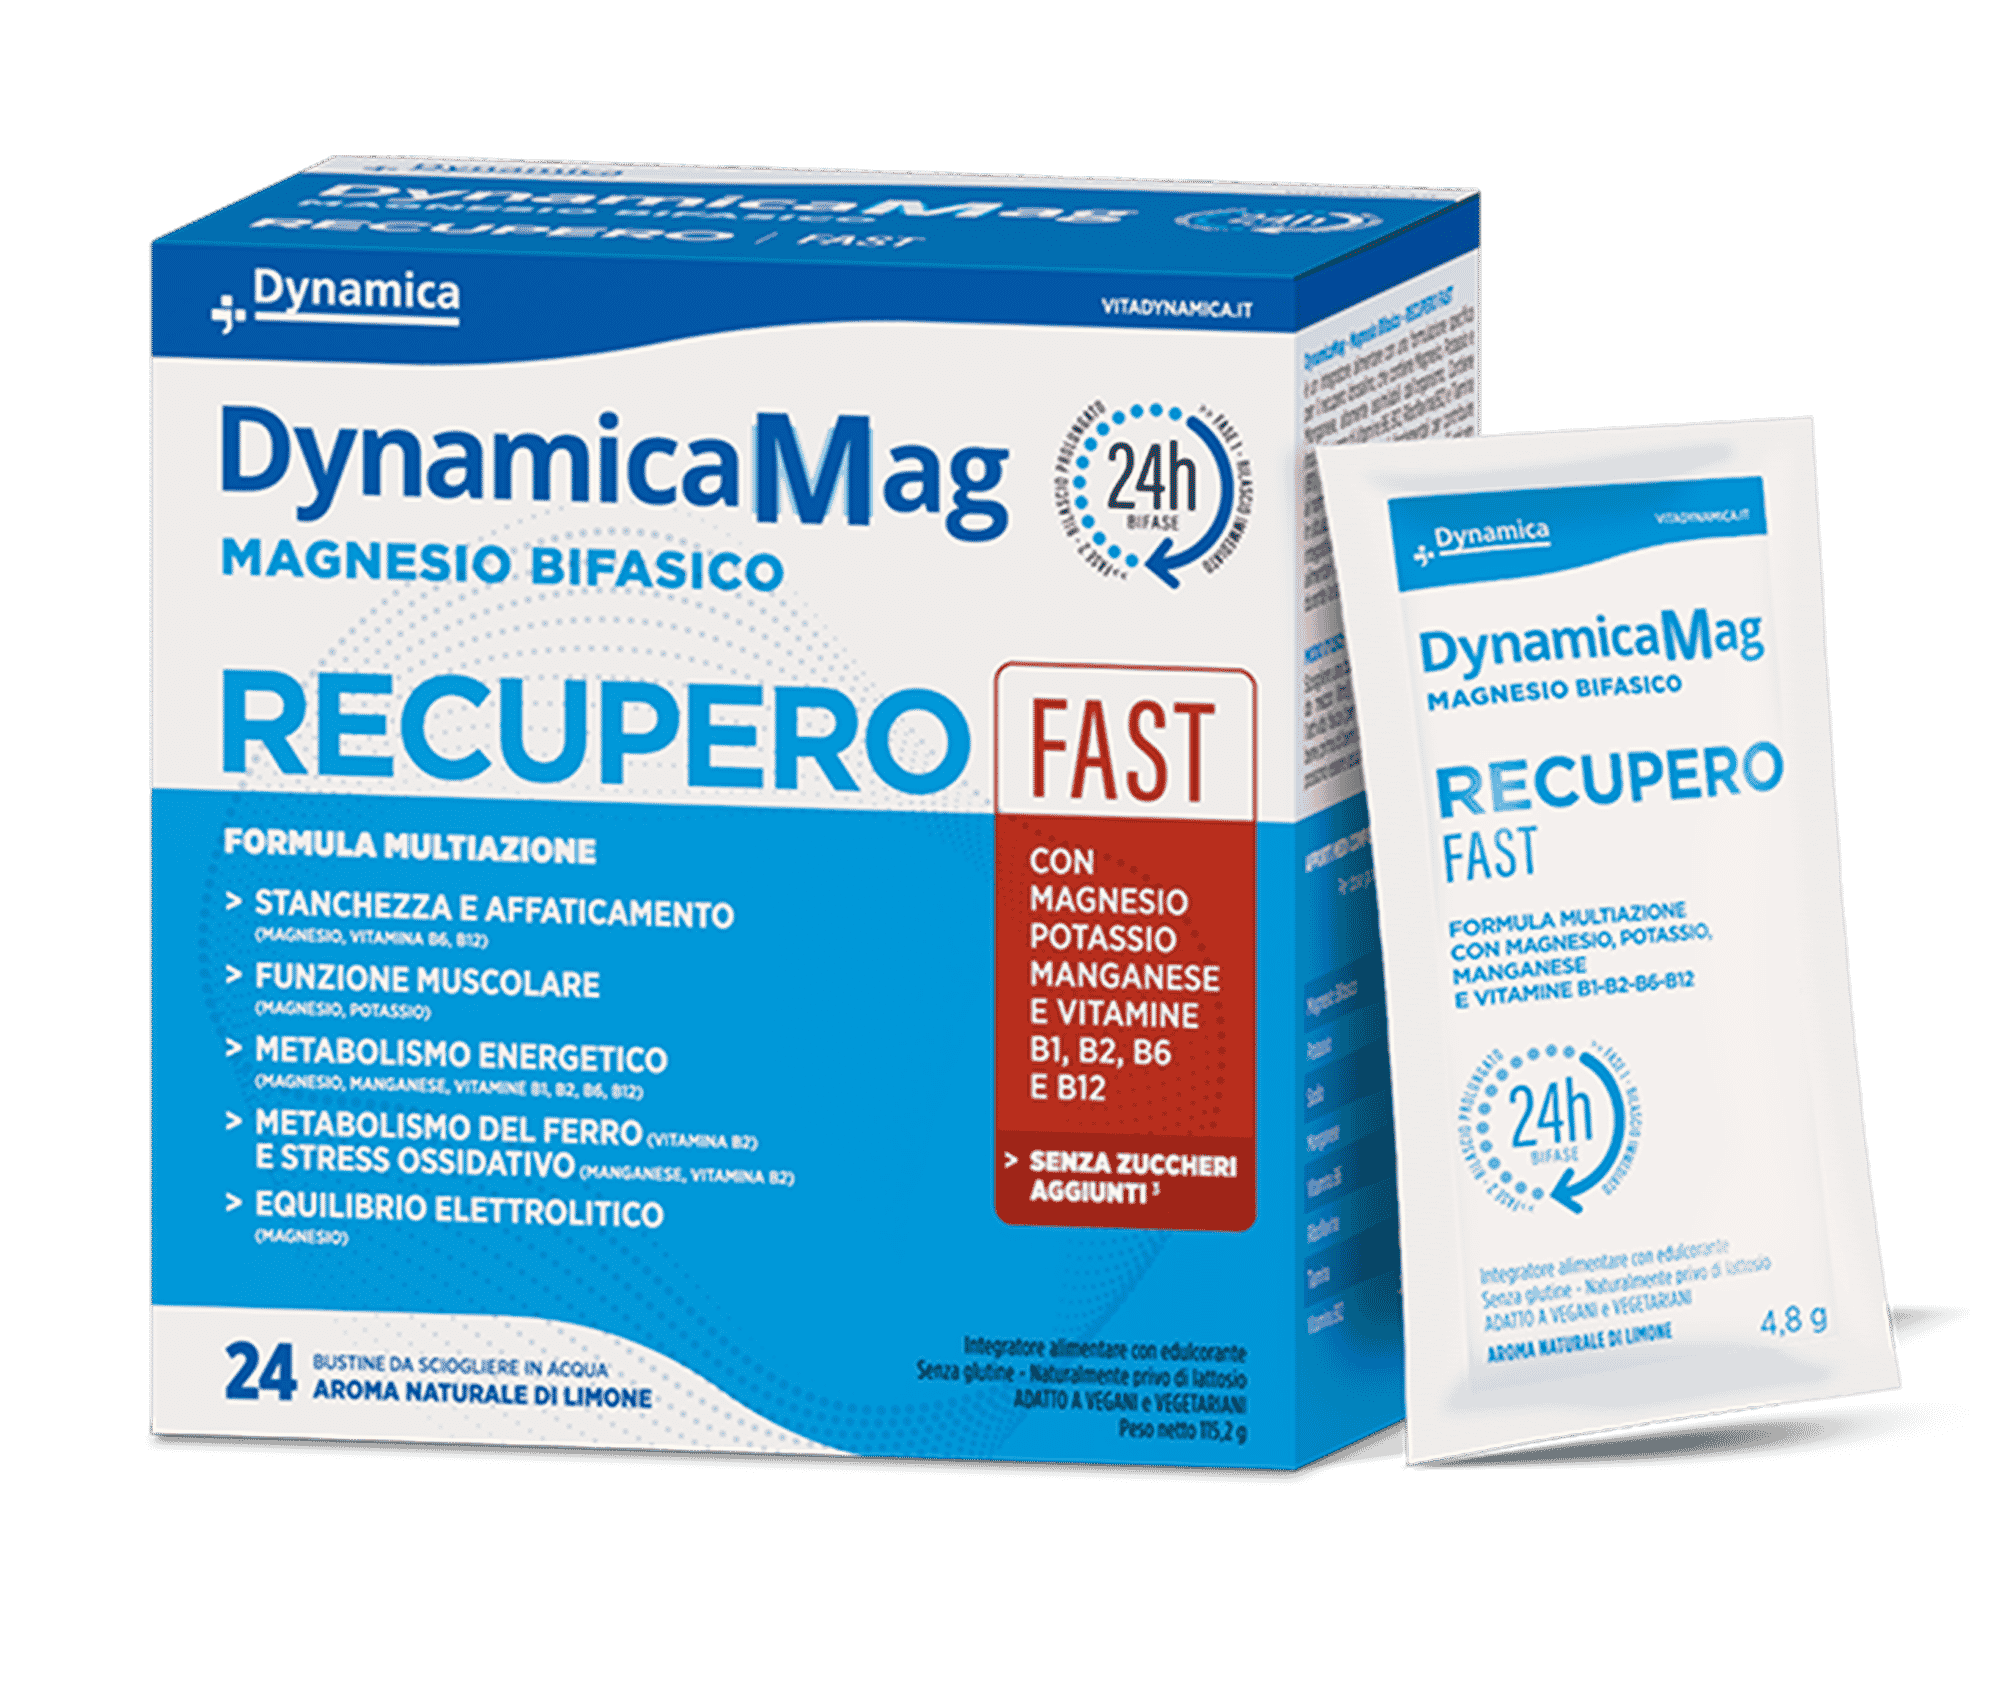 DynamicaMag Recupero Fast - Pack